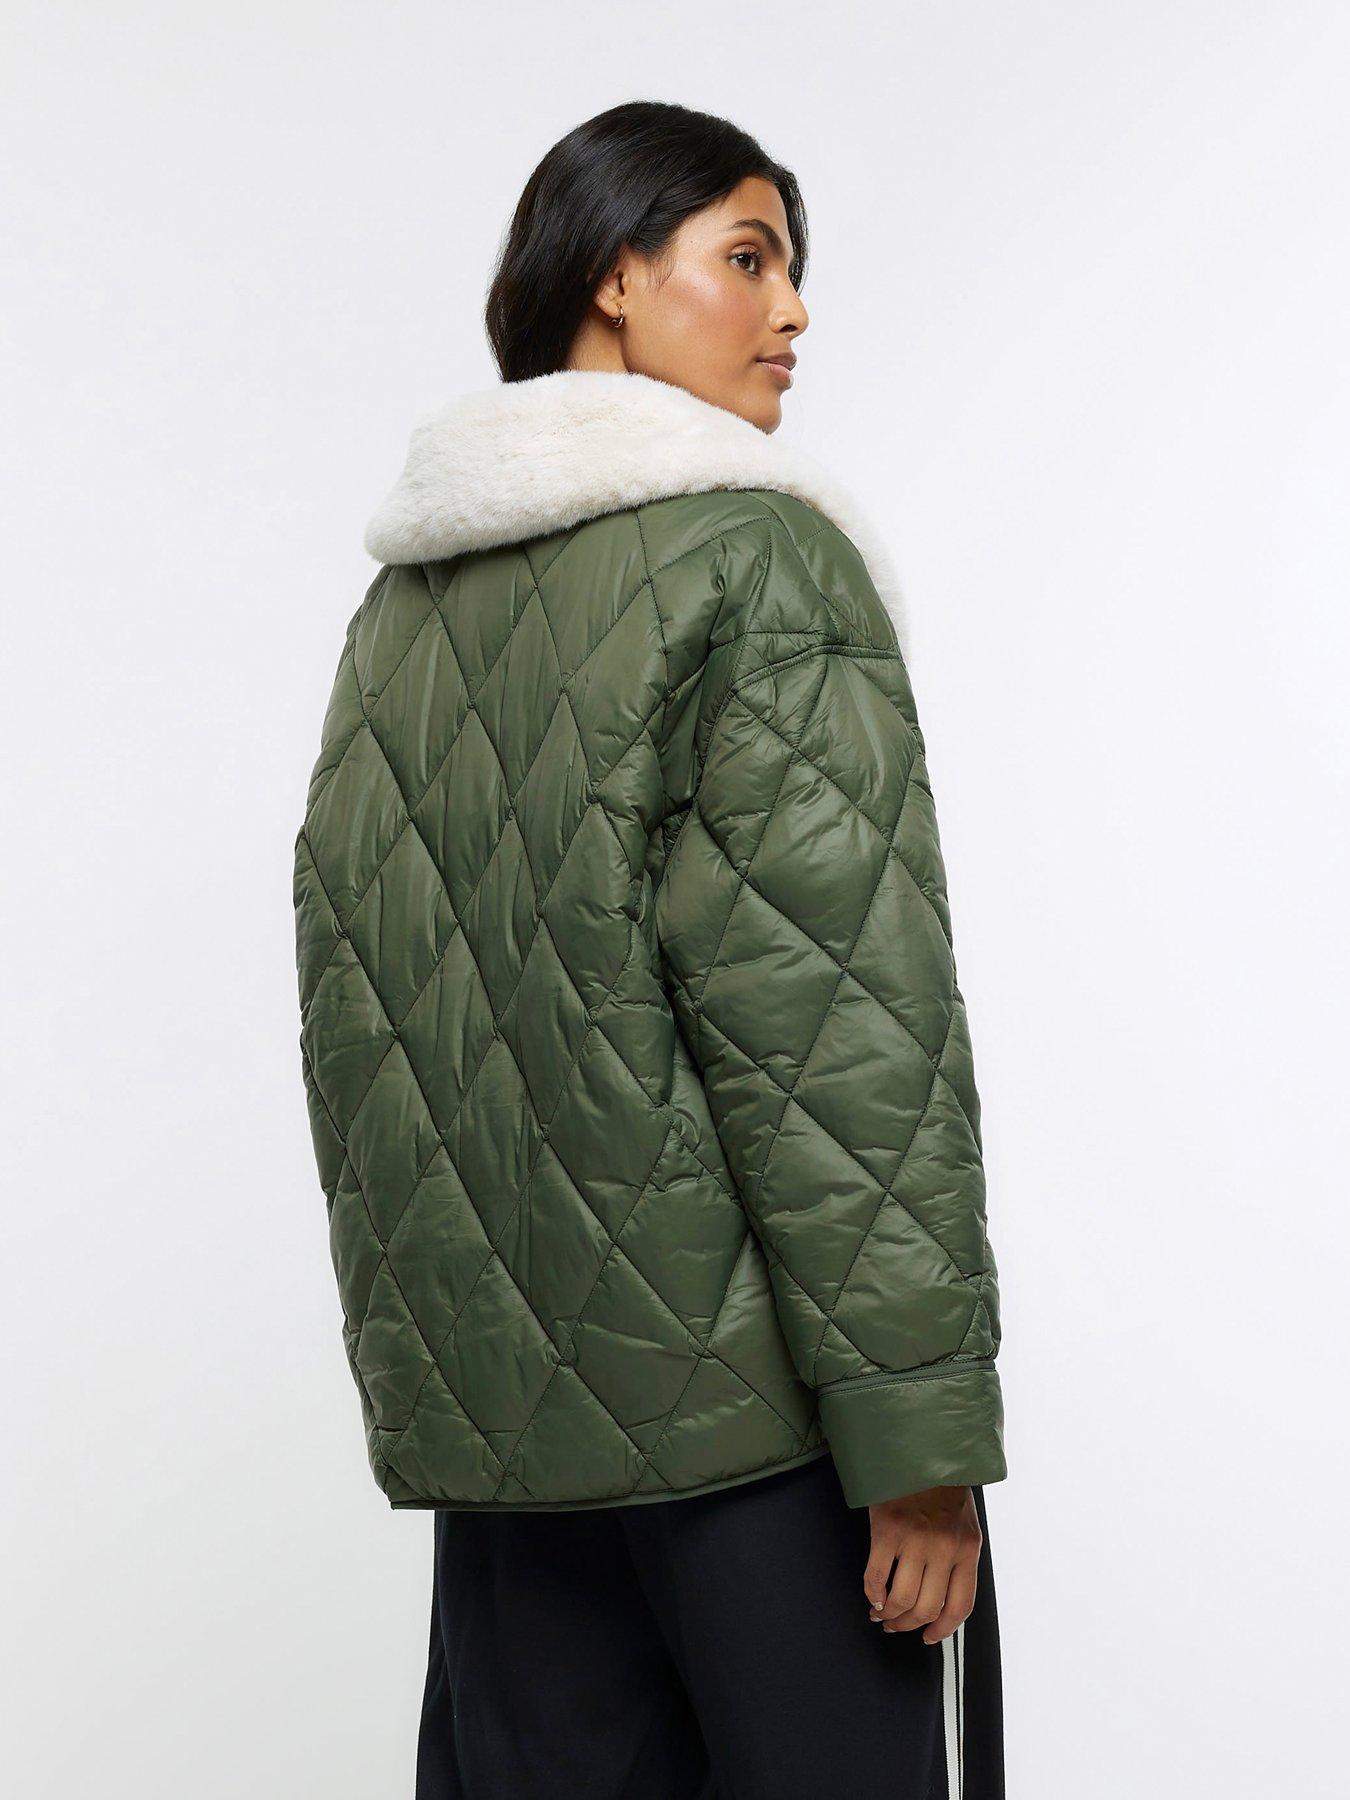 River Island faux fur lined parka jacket in khaki